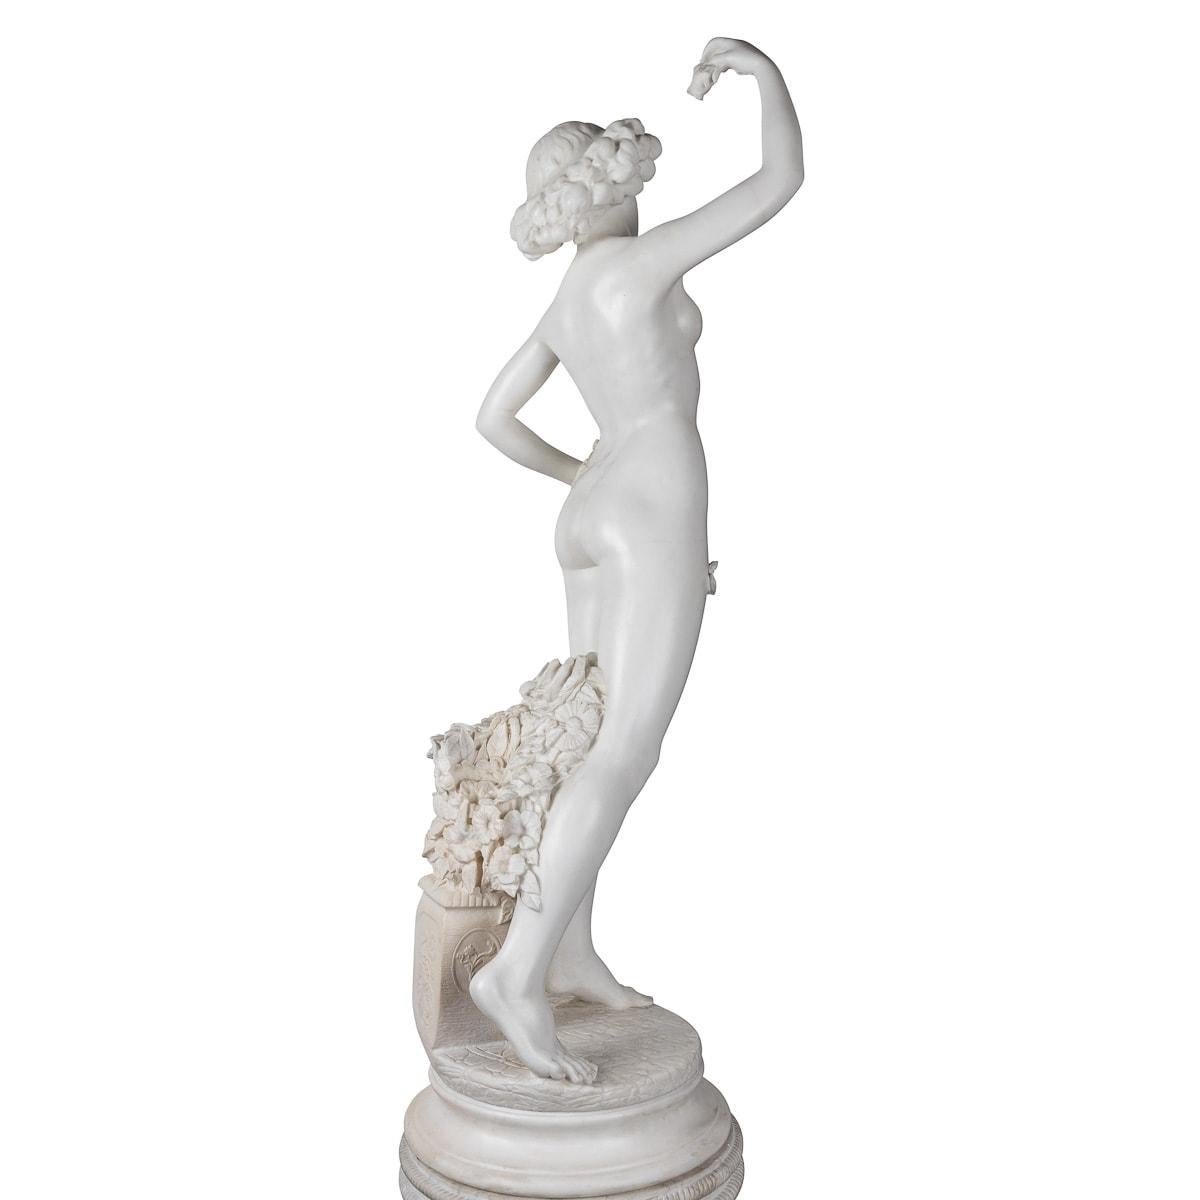 italien Figure d'un nu, Adolfo Cipriani (1880-1930), Italie, marbre du 19e siècle en vente